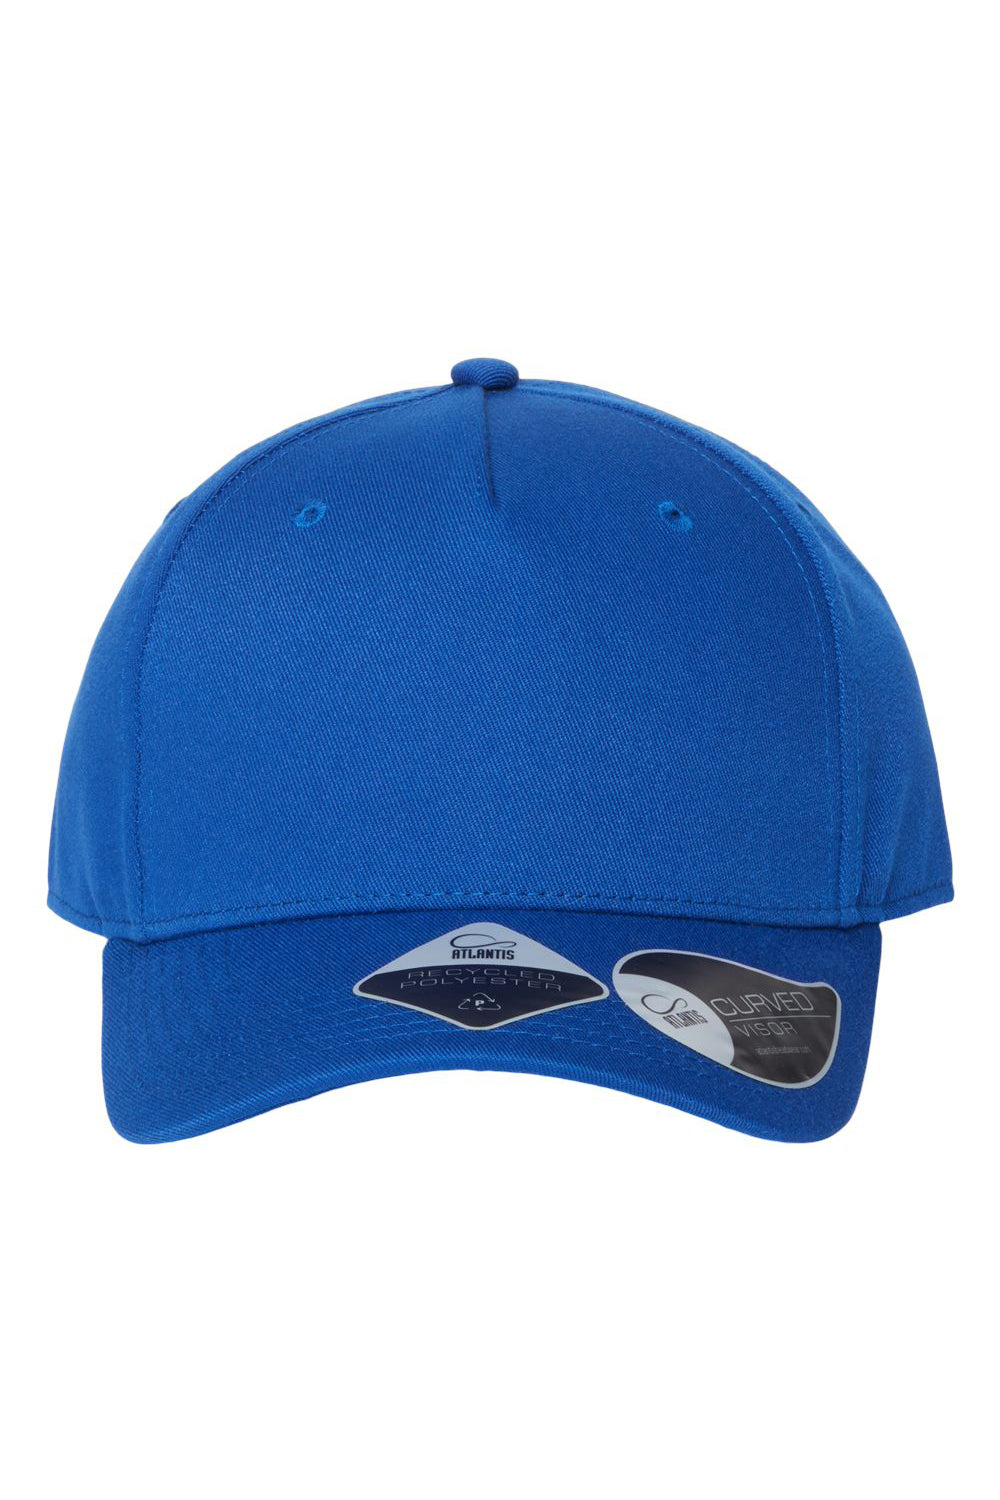 Atlantis Headwear FIJI Mens Sustainable Adjustable Hat Royal Blue Flat Front